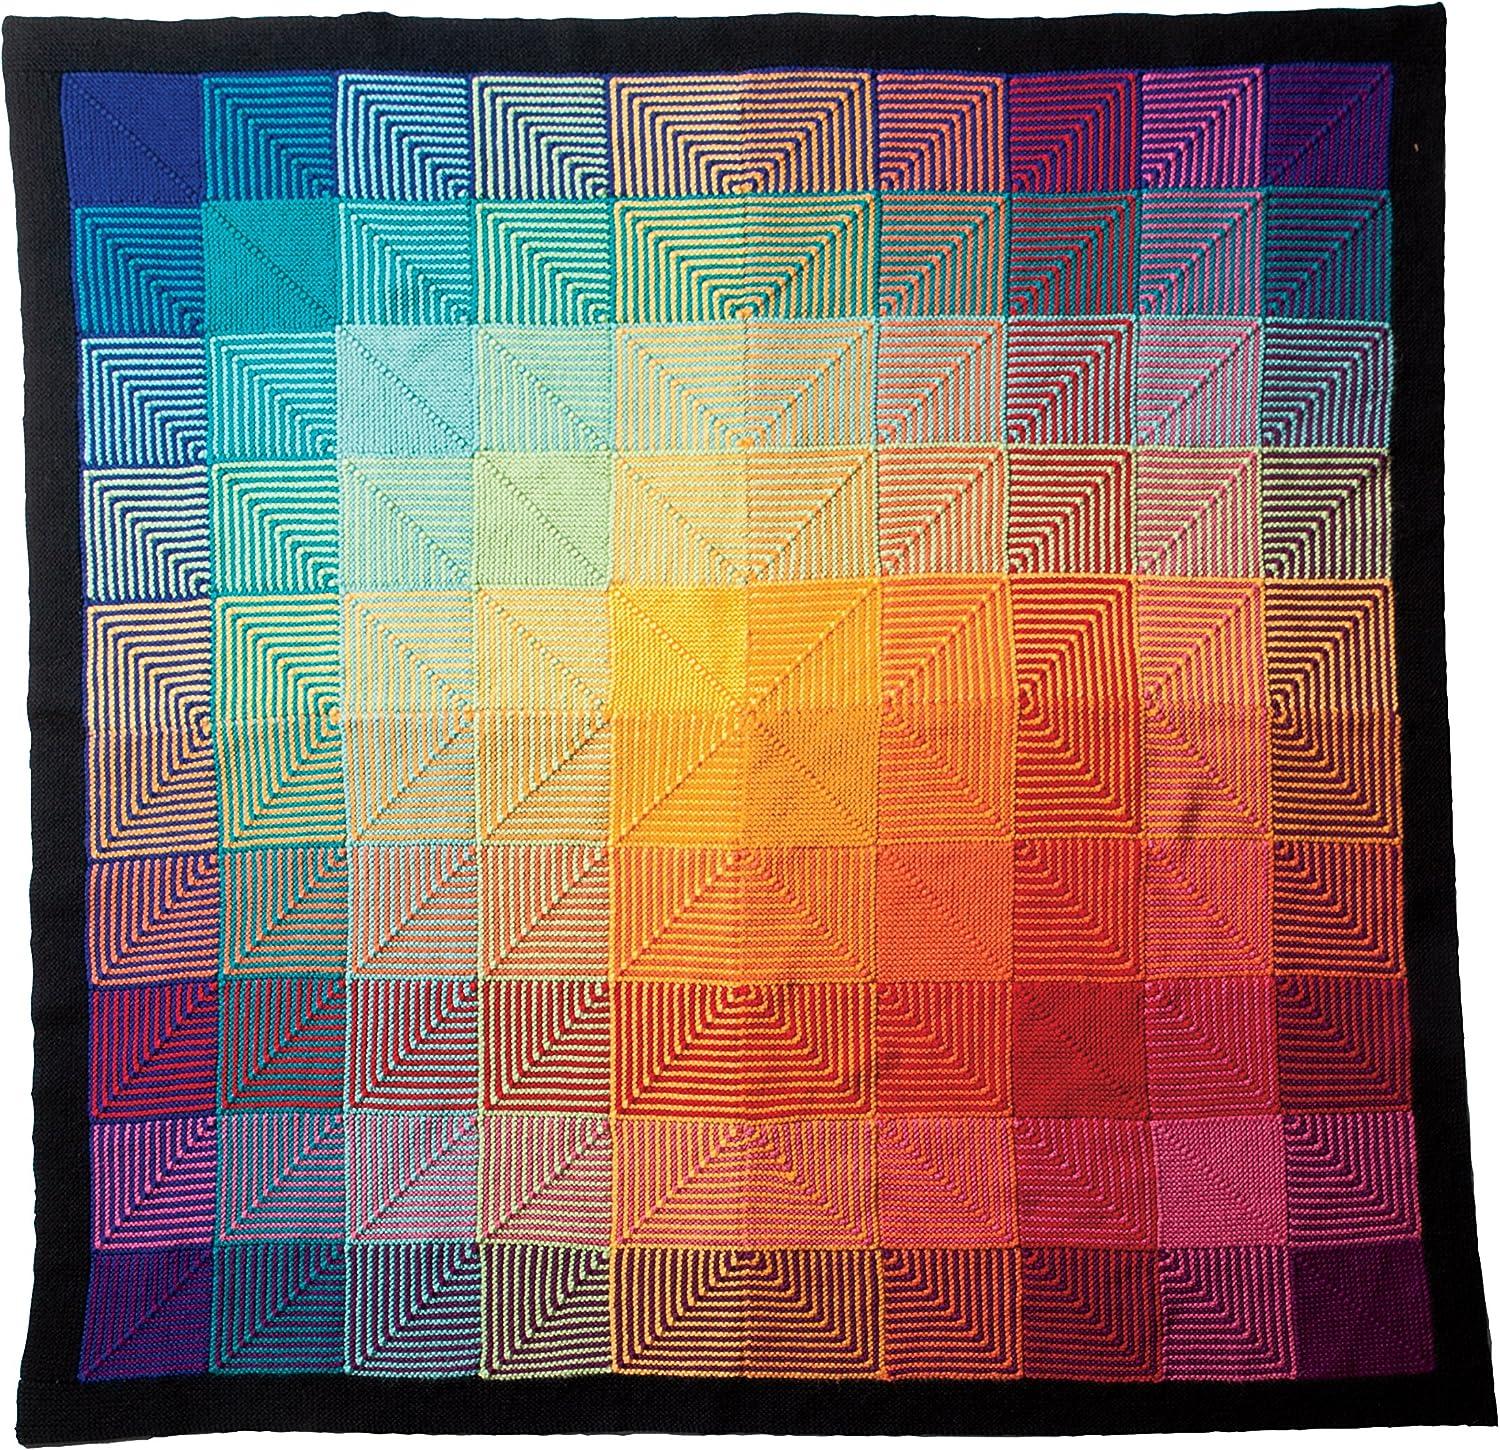 Knit Picks Hue Shift Afghan Knitting Pattern Kit (Rainbow)